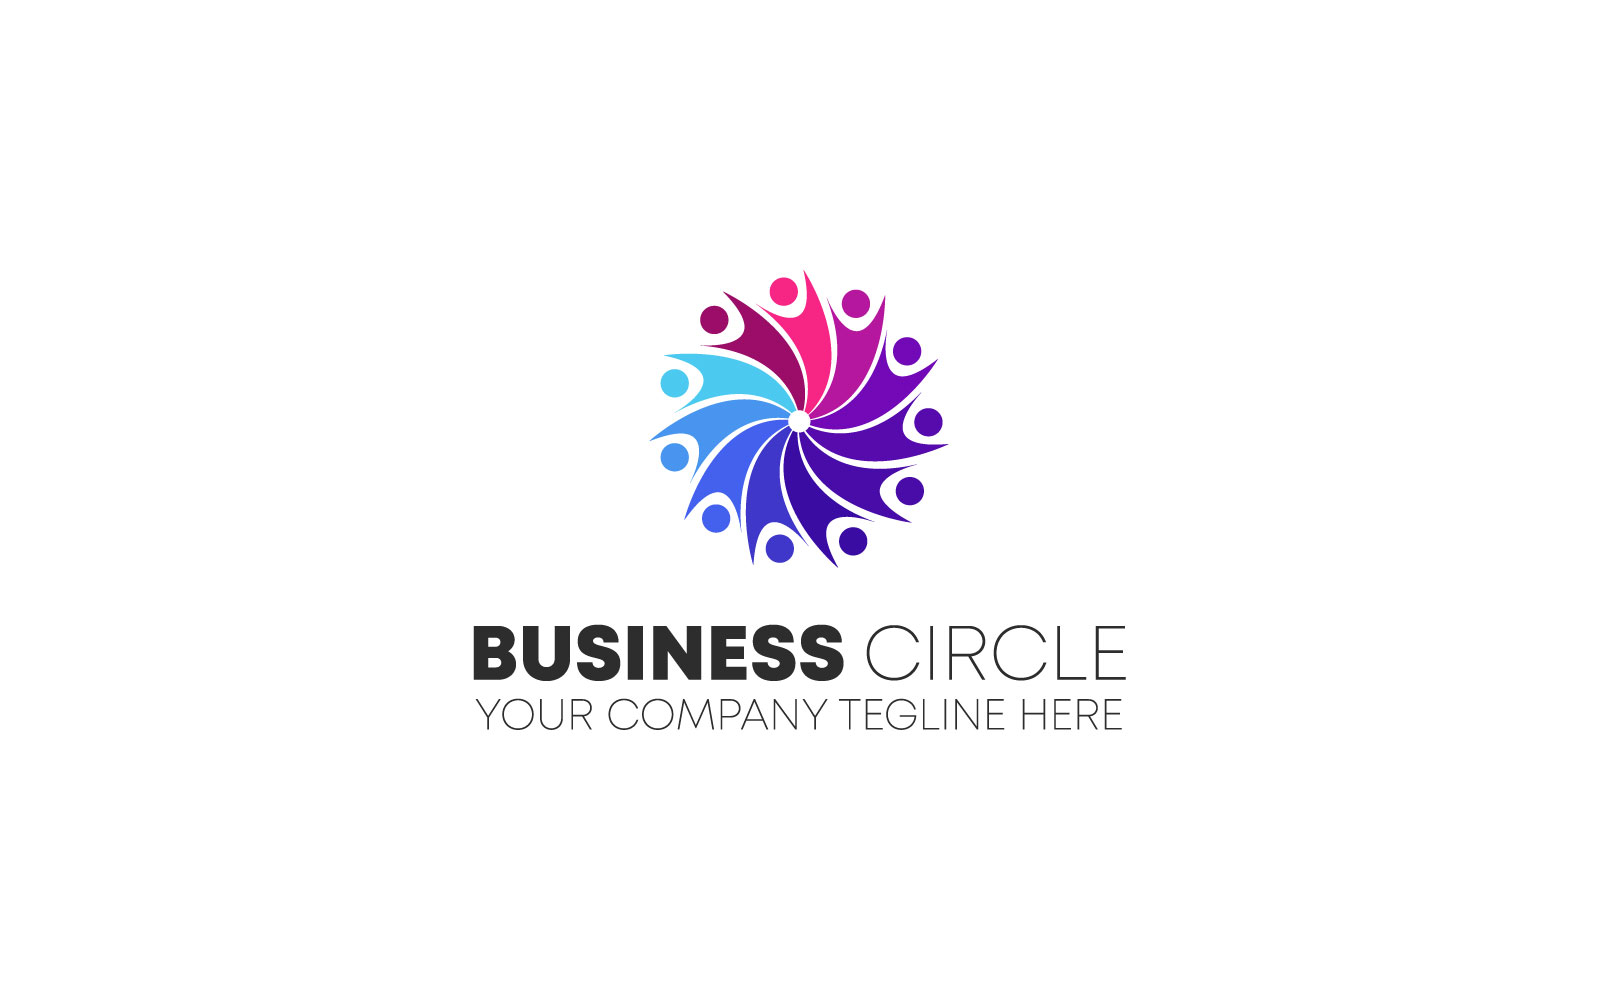 Business Circle Logo Design Template